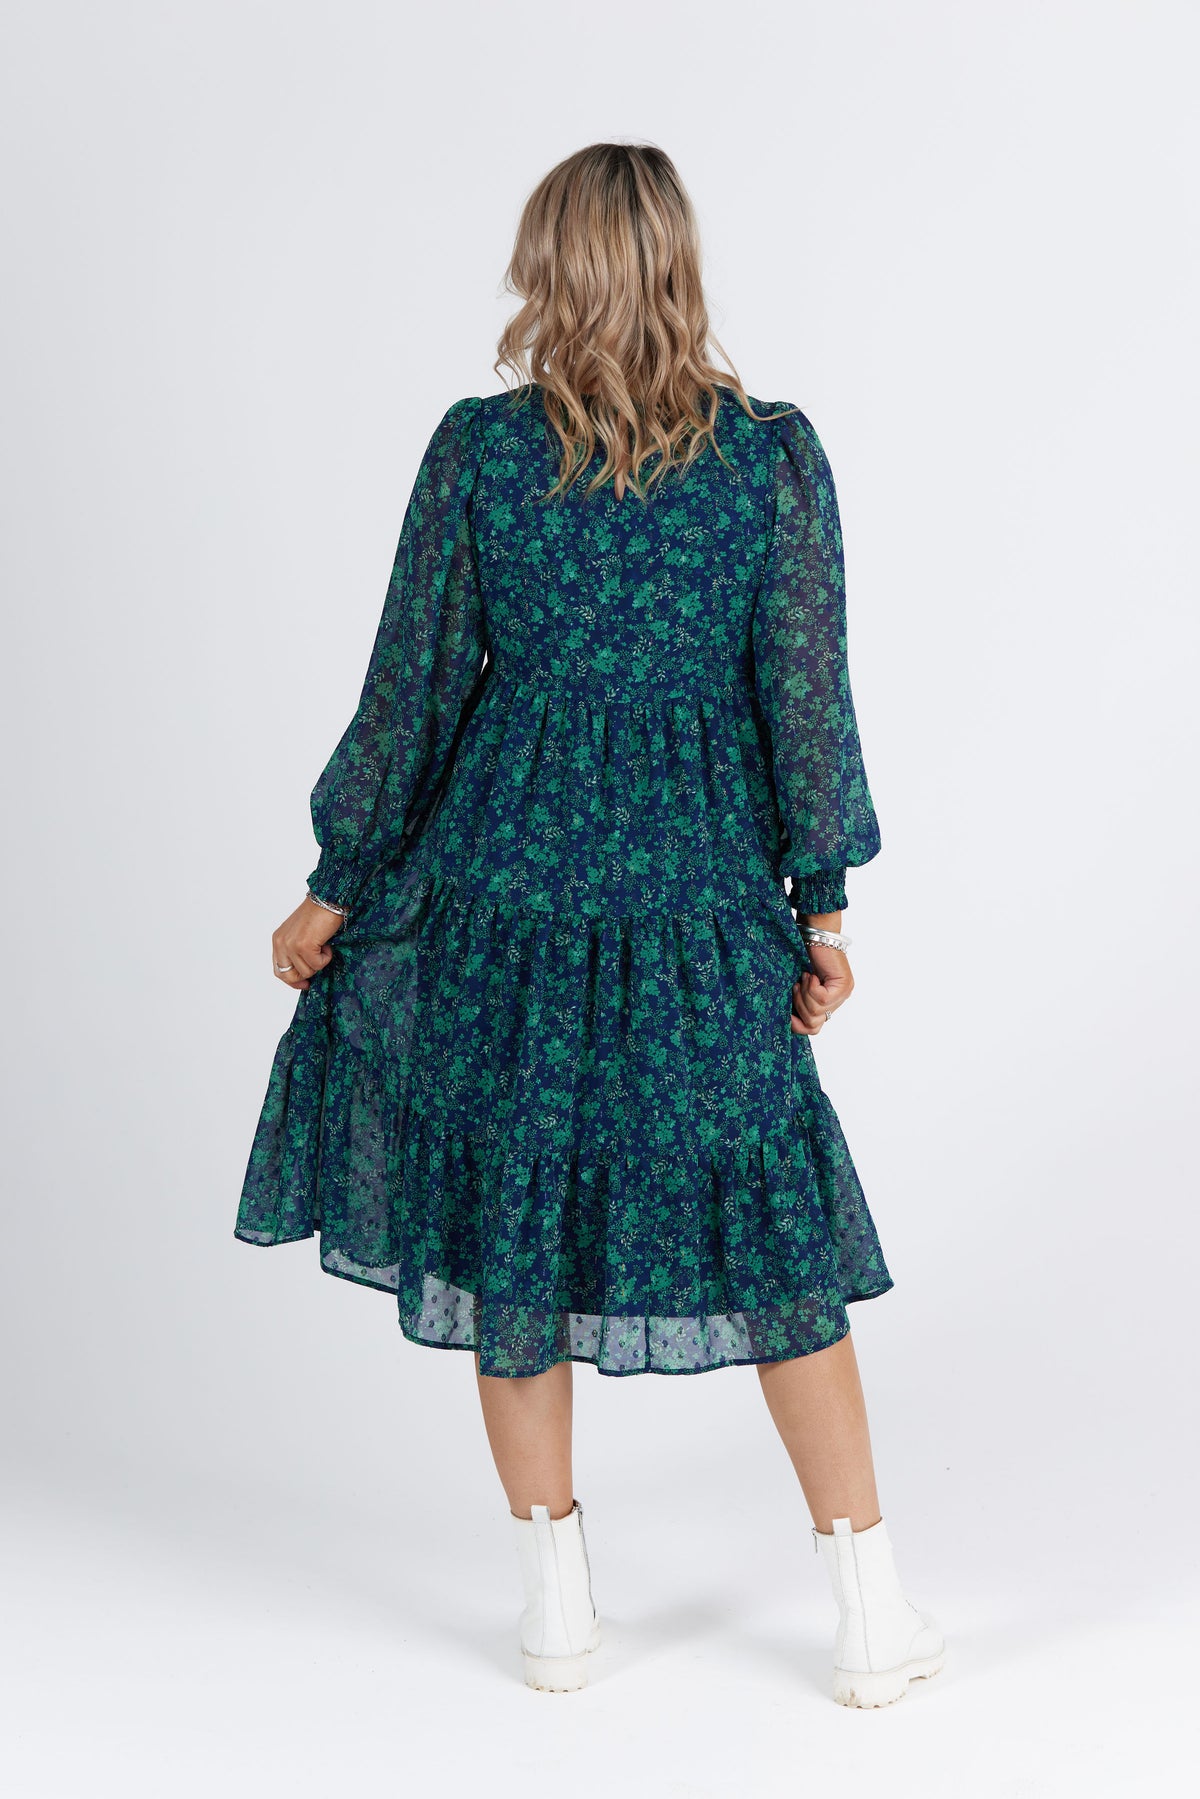 Complete Midi Dress Midnight Emerald Print - EXCLUSIVE TO MINT